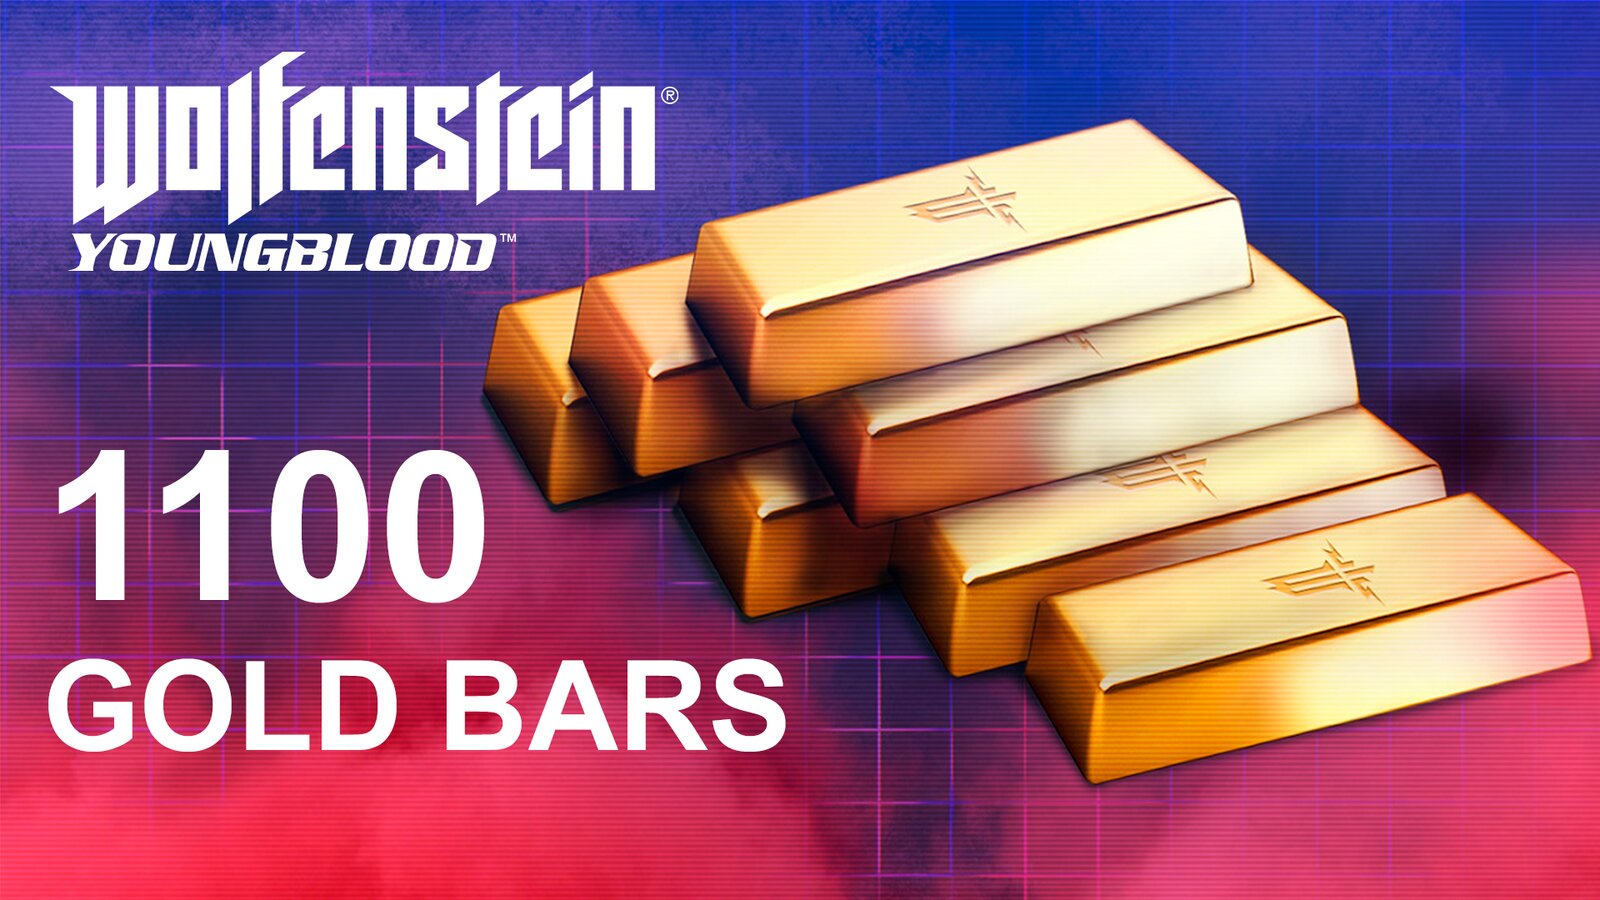 Wolfenstein: Youngblood - 1100 Gold Bars